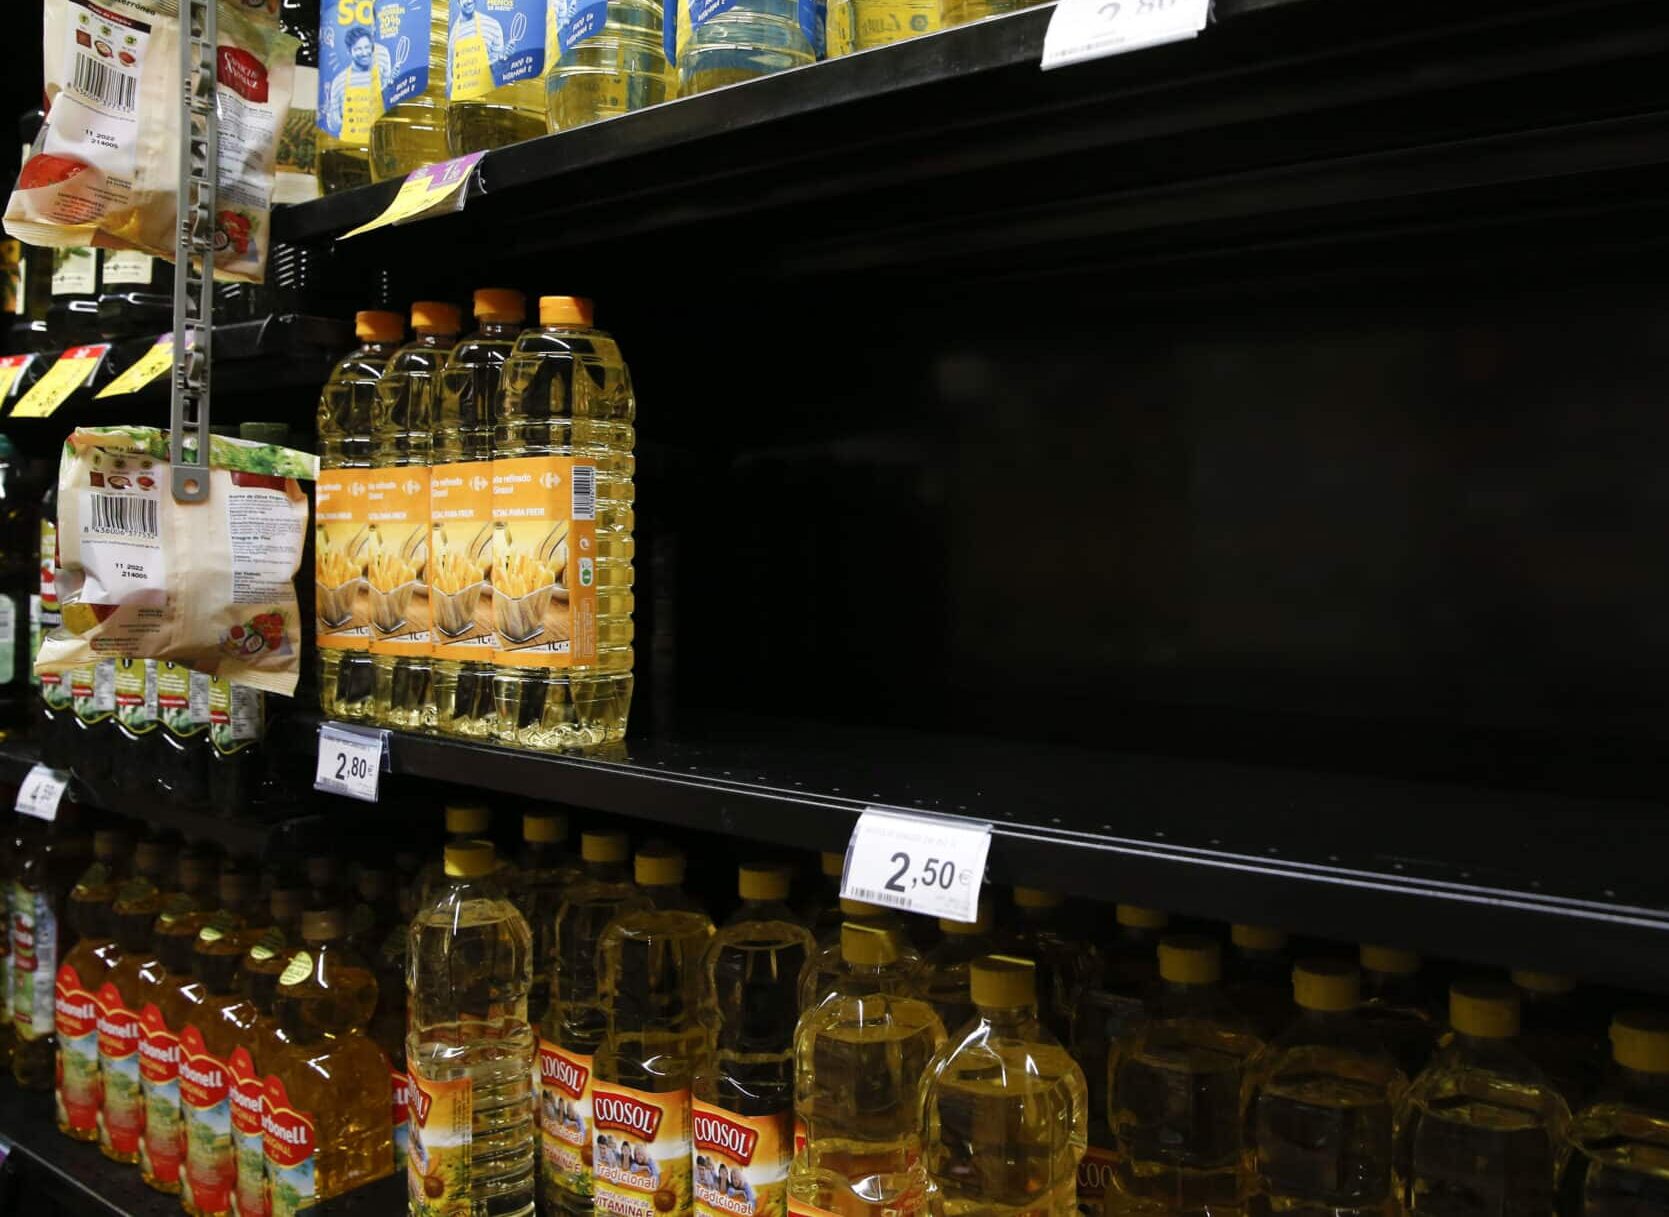 Un expositor casi vacío de botellas de aceite de girasol en un supermercado.